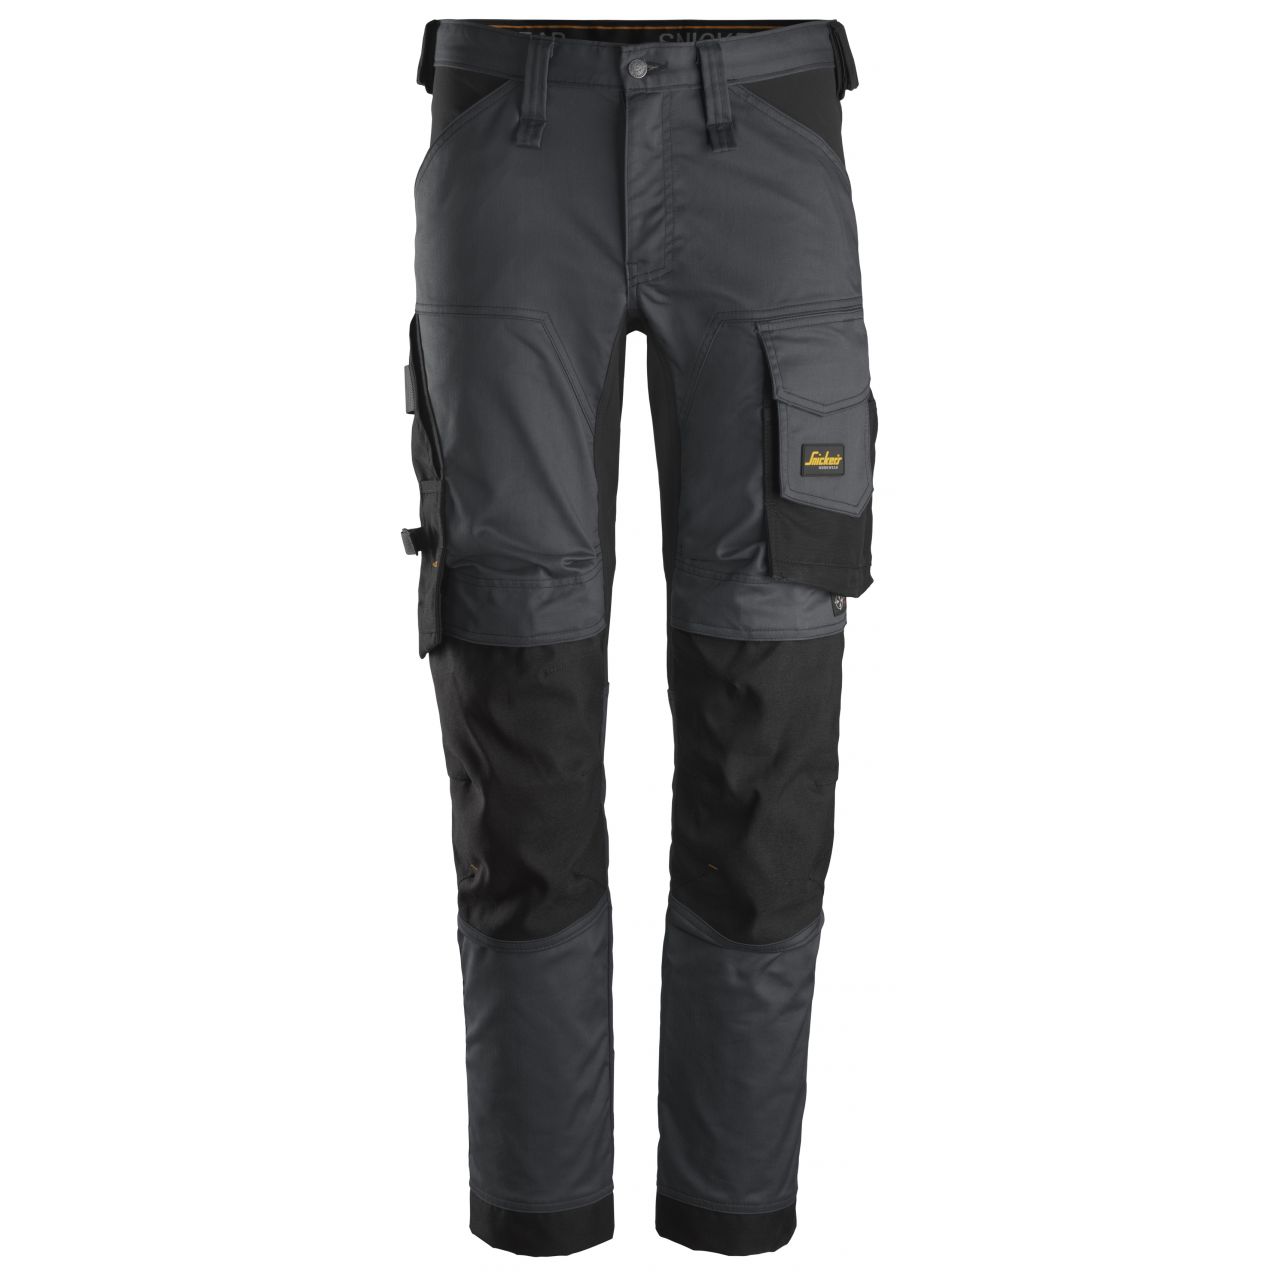 Pantalones elásticos AllroundWork Gris Acero-Negro talla 52